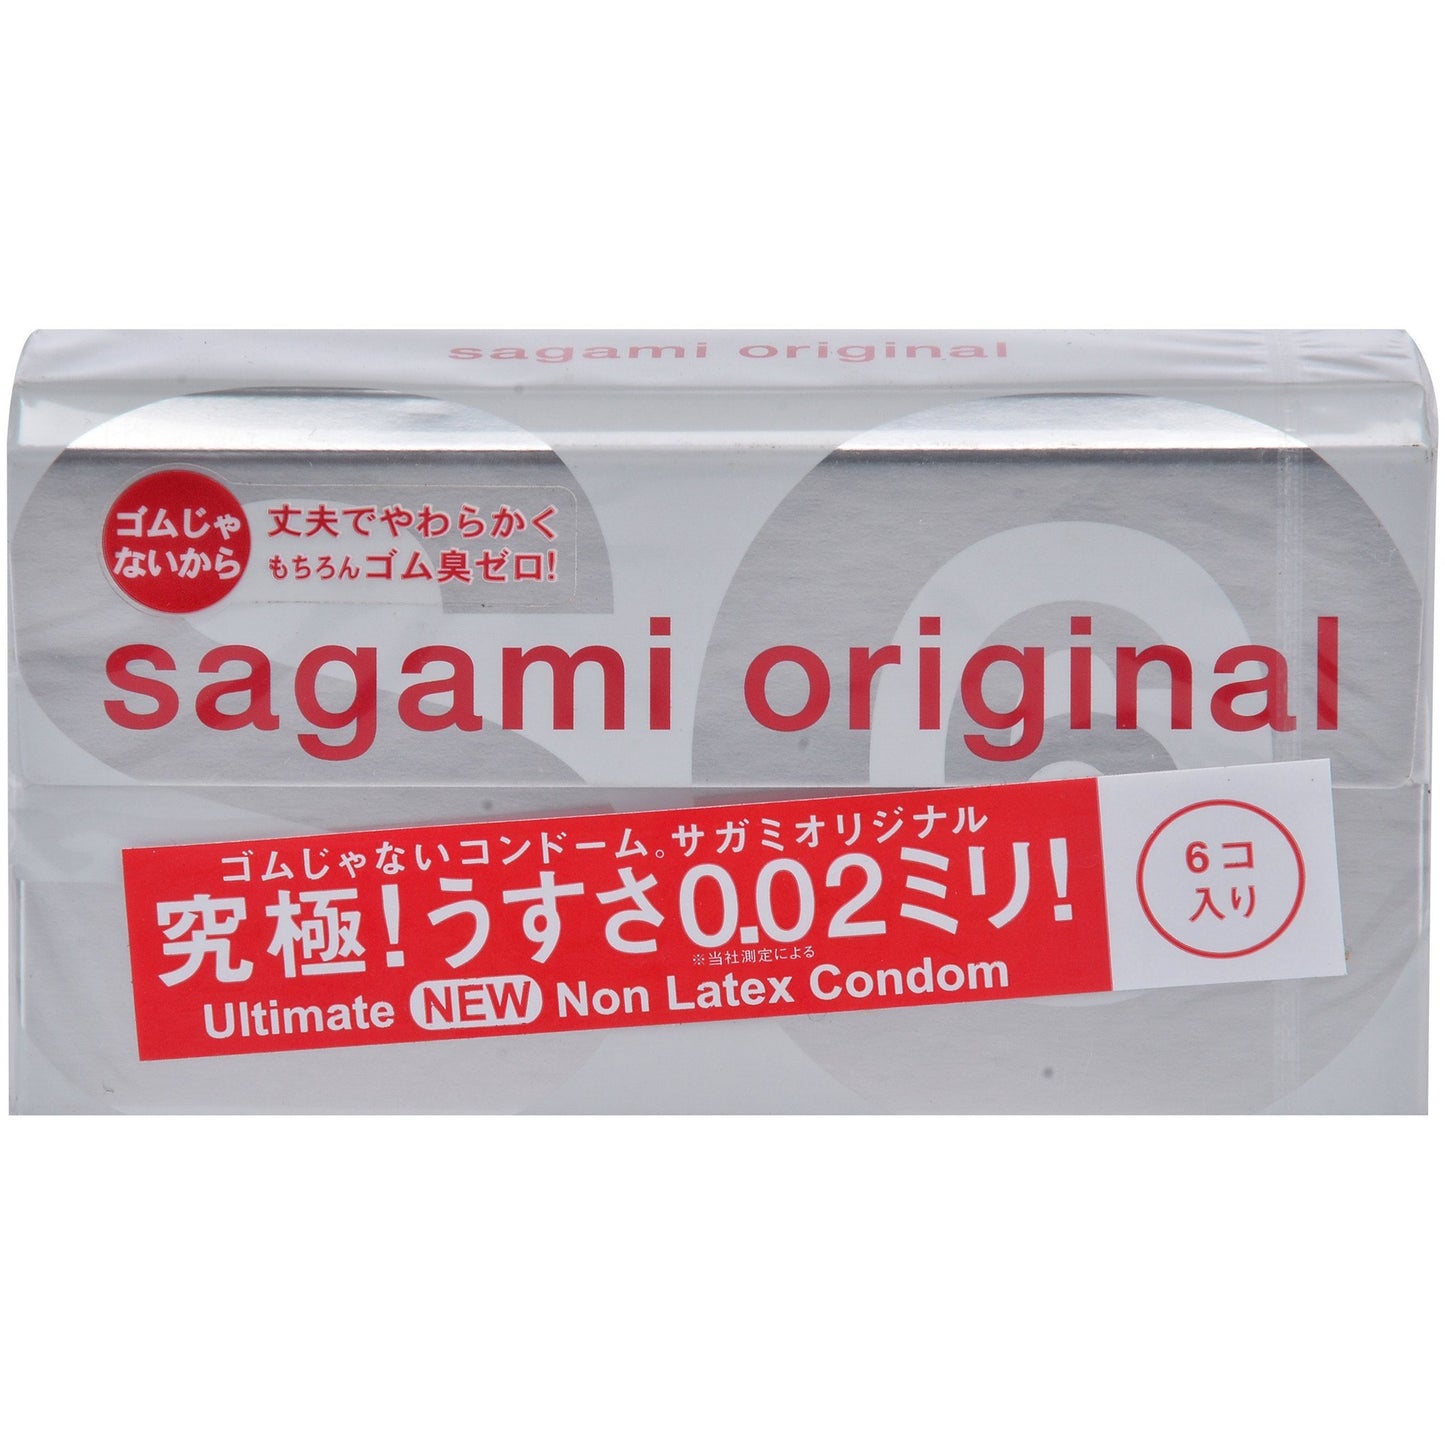 Gambar Sagami Kondom Original 002 S - 6 Pcs Jenis Kondom